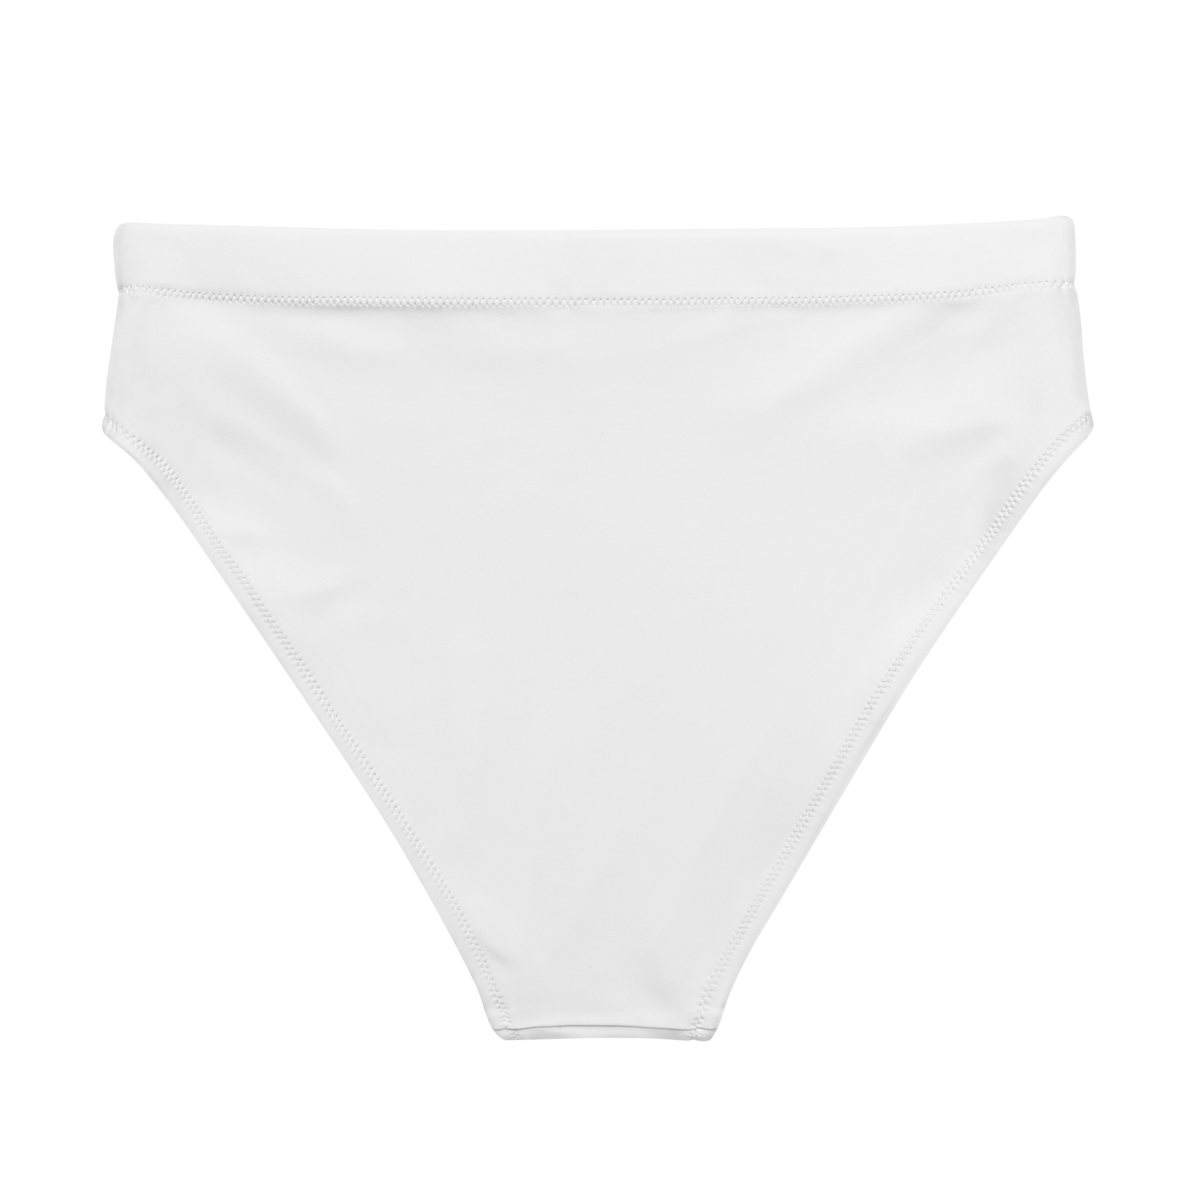 Velisse Origin bikini bottom, high-waisted bikini bottom, black bikini bottom, unicorn, simple bikini, minimalistic, minimalistic swimwear, minimalistic bikini, white bikini